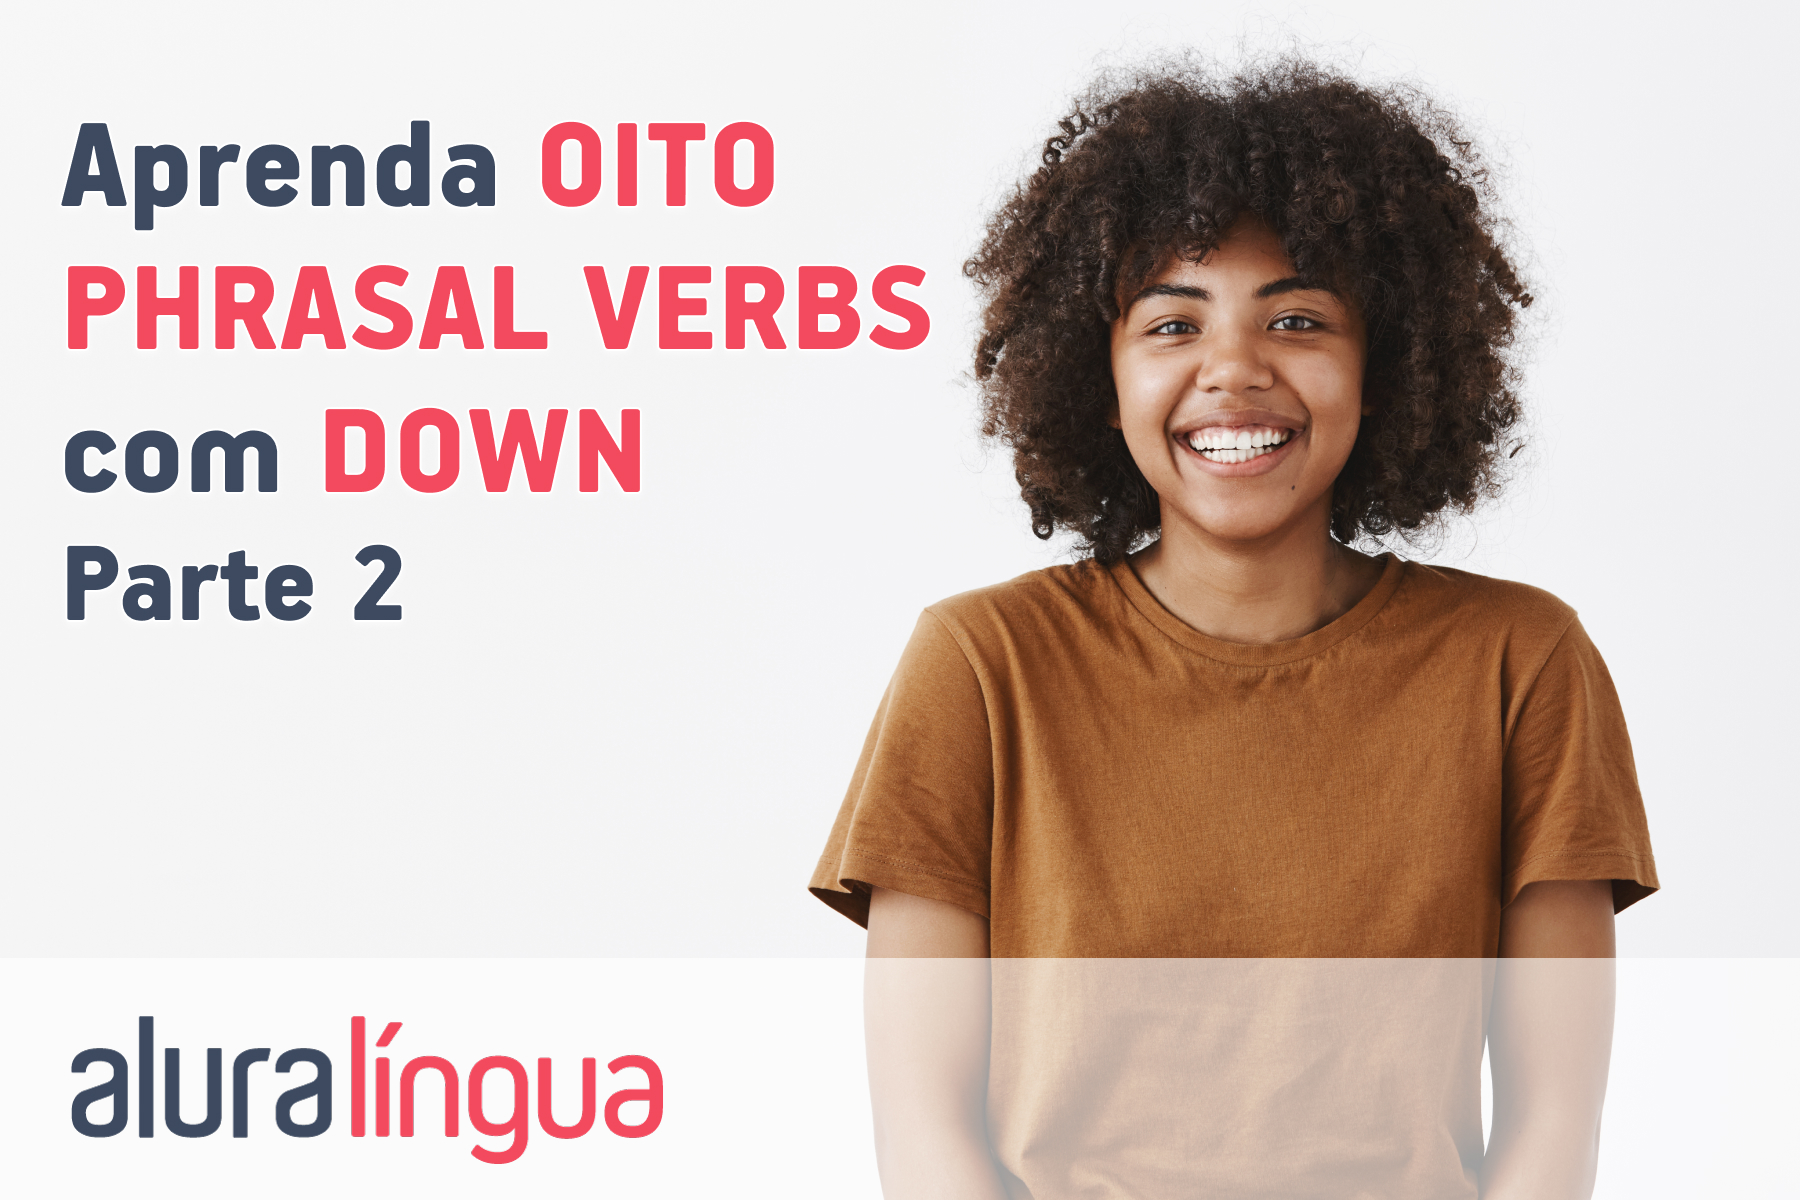 Aprenda 8 phrasal verbs com DOWN #inset